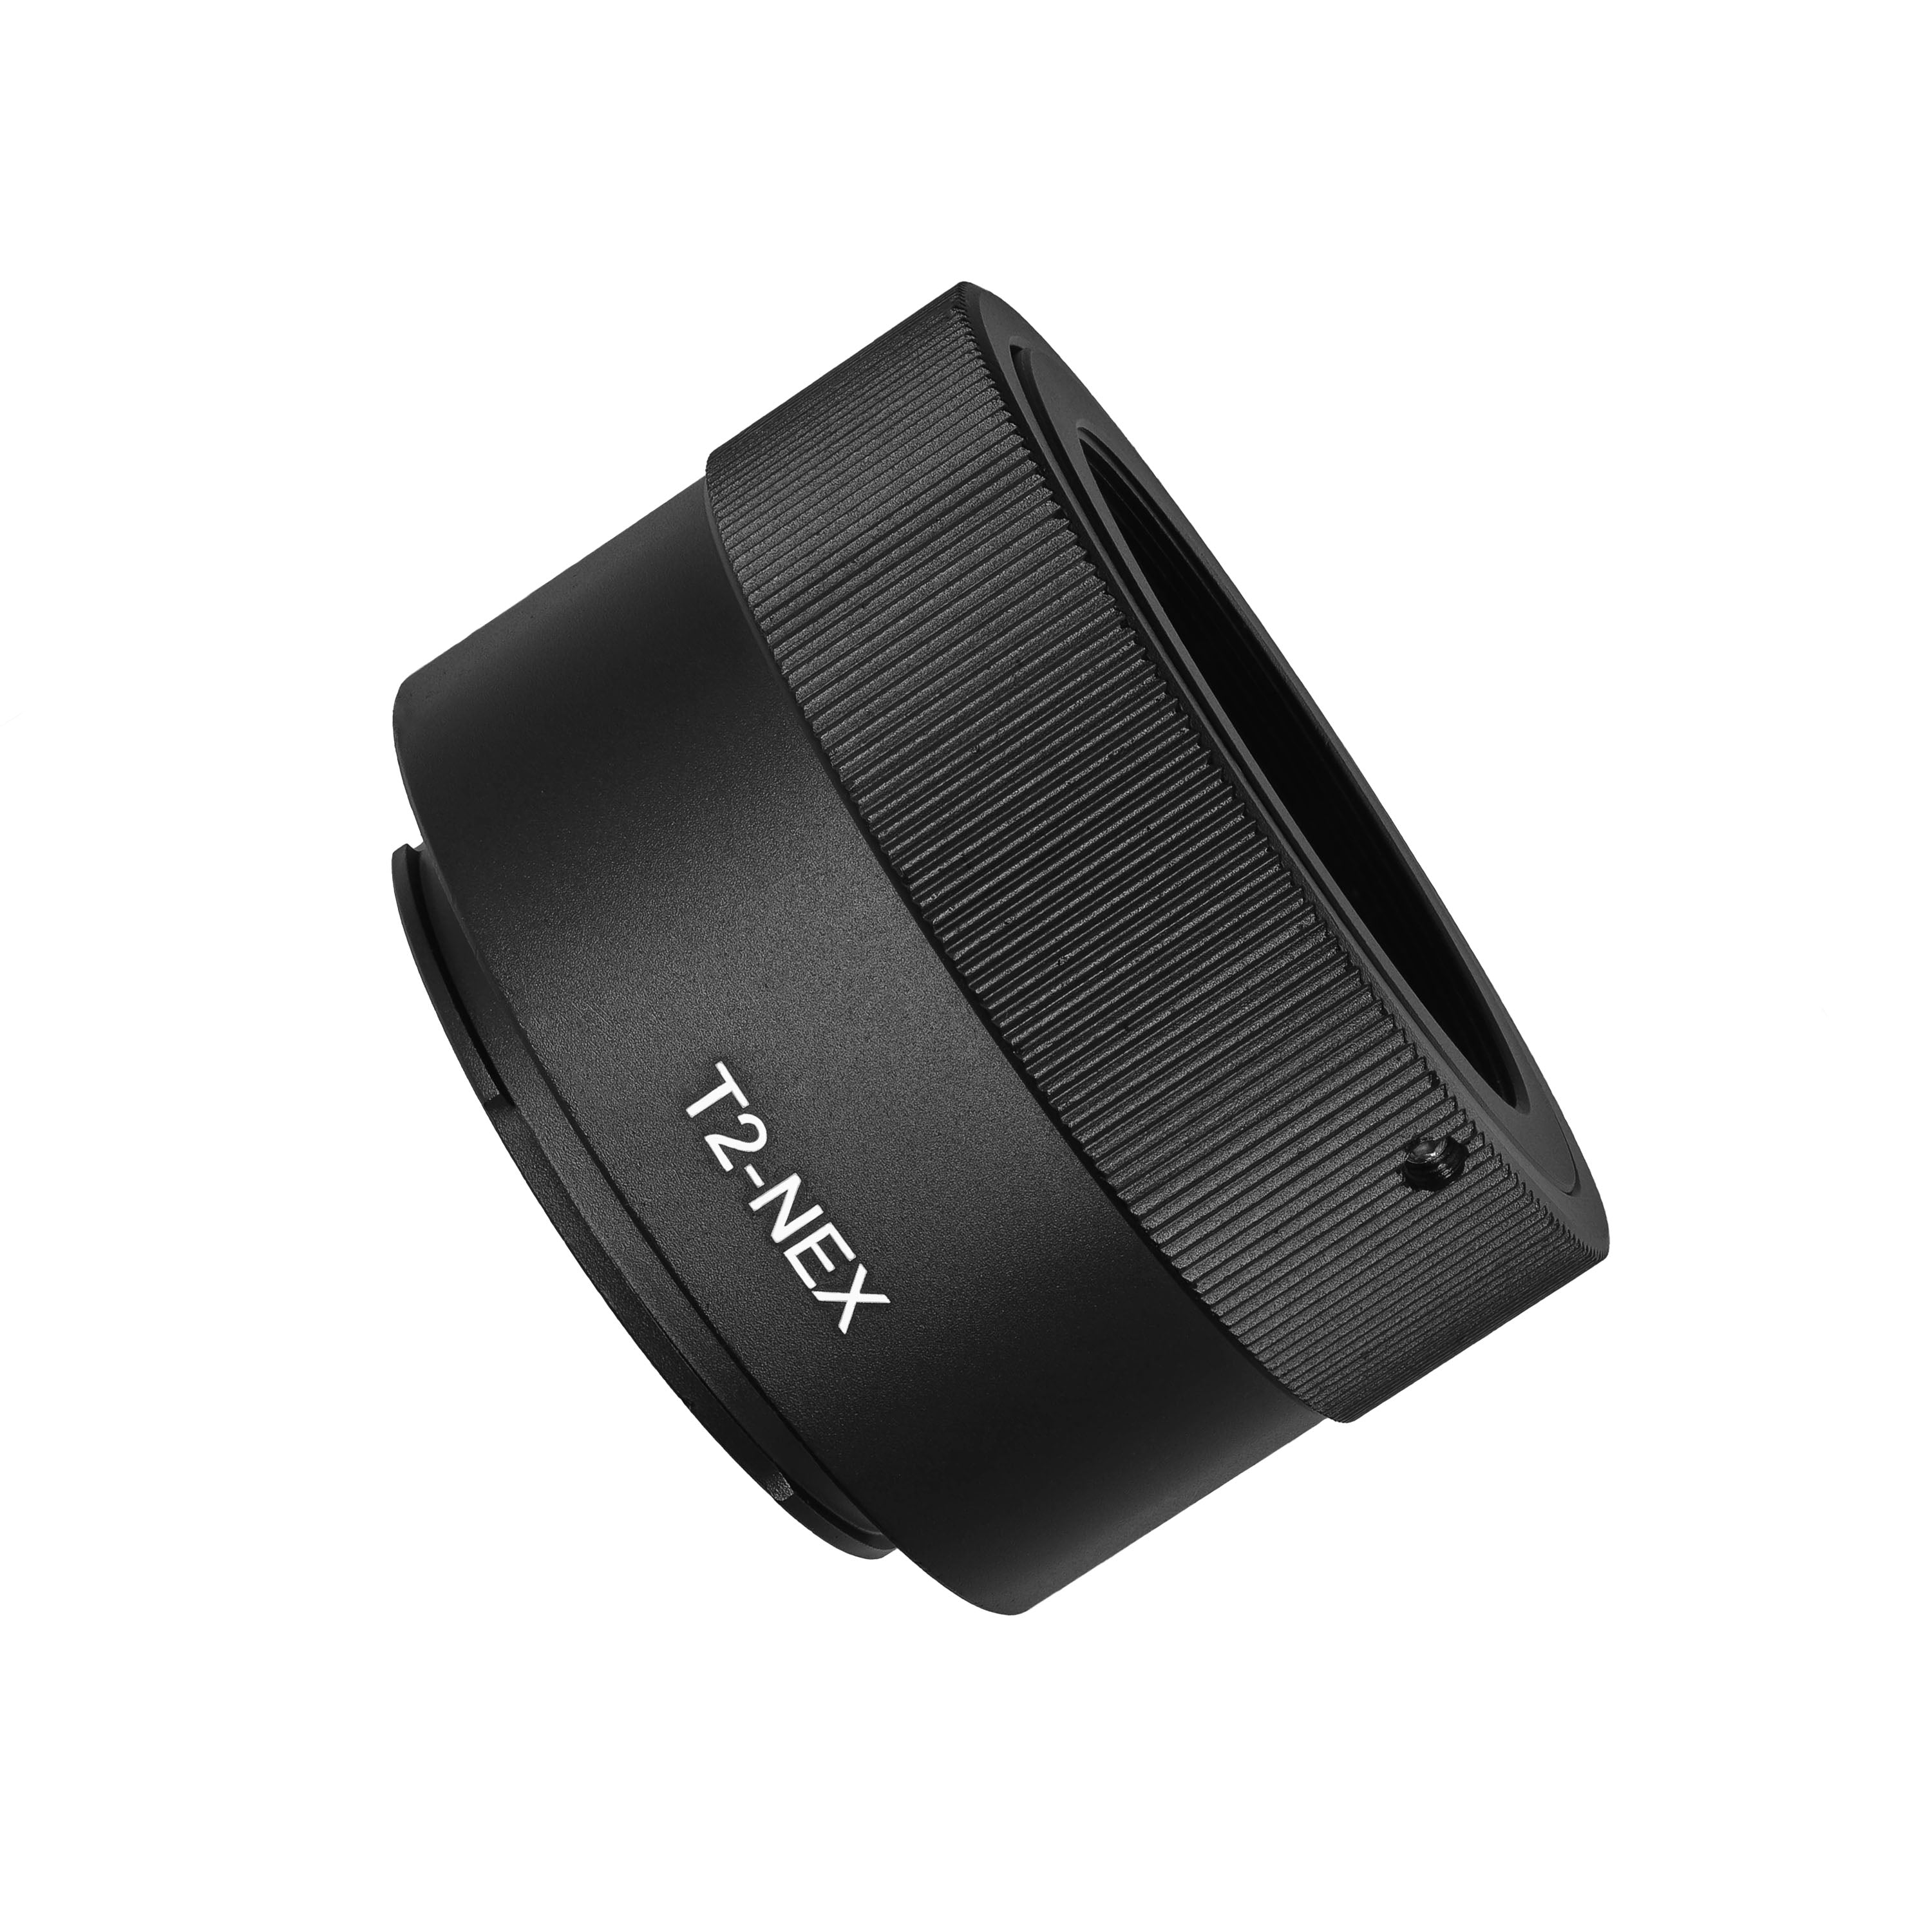 Adaptor Montura T2 - Sony E-mount (Nex)